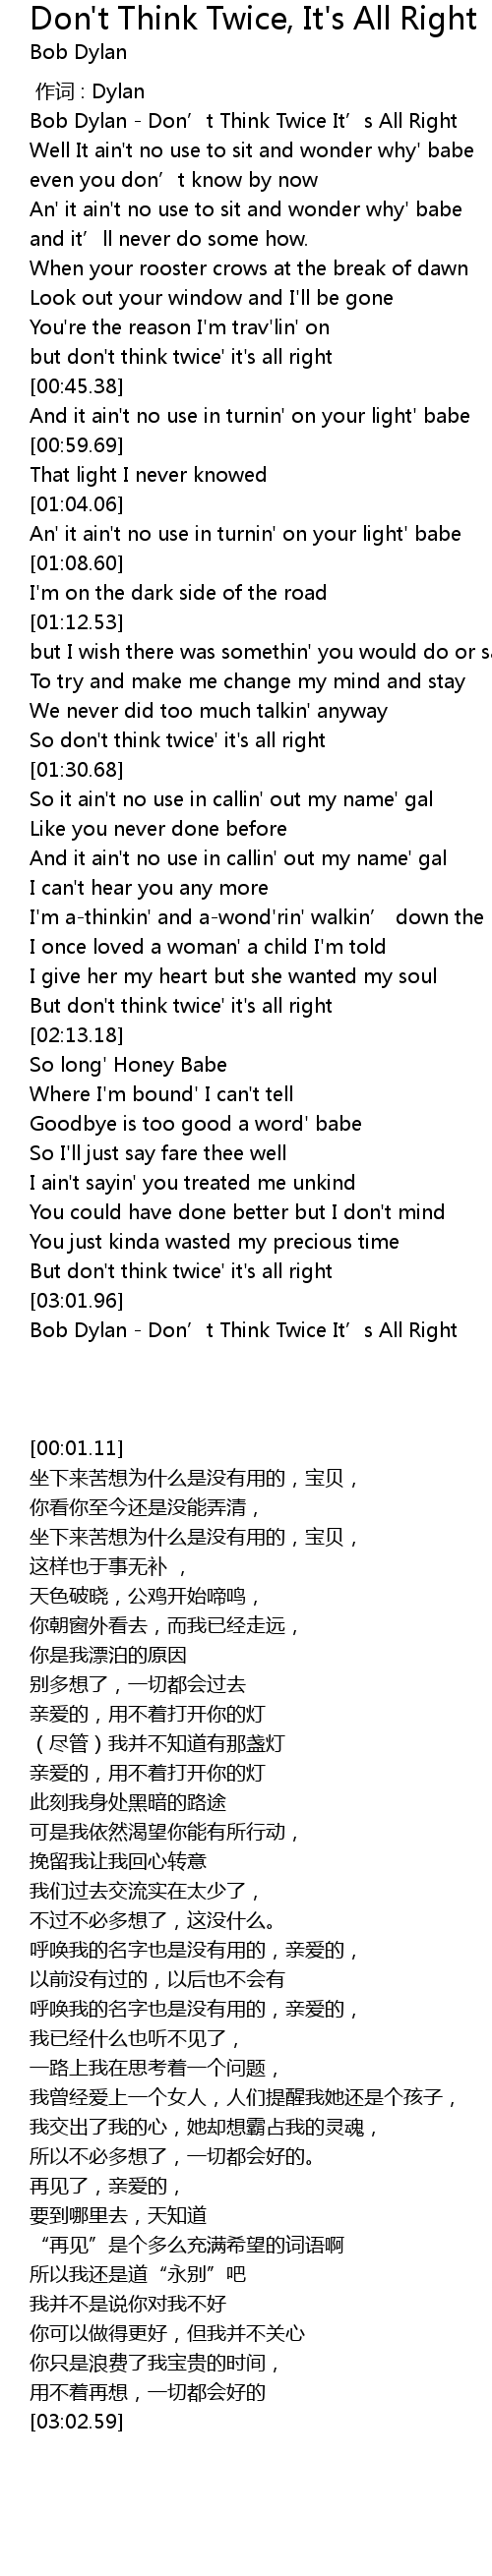 Don T Think Twice It S All Right Lyrics Follow Lyrics